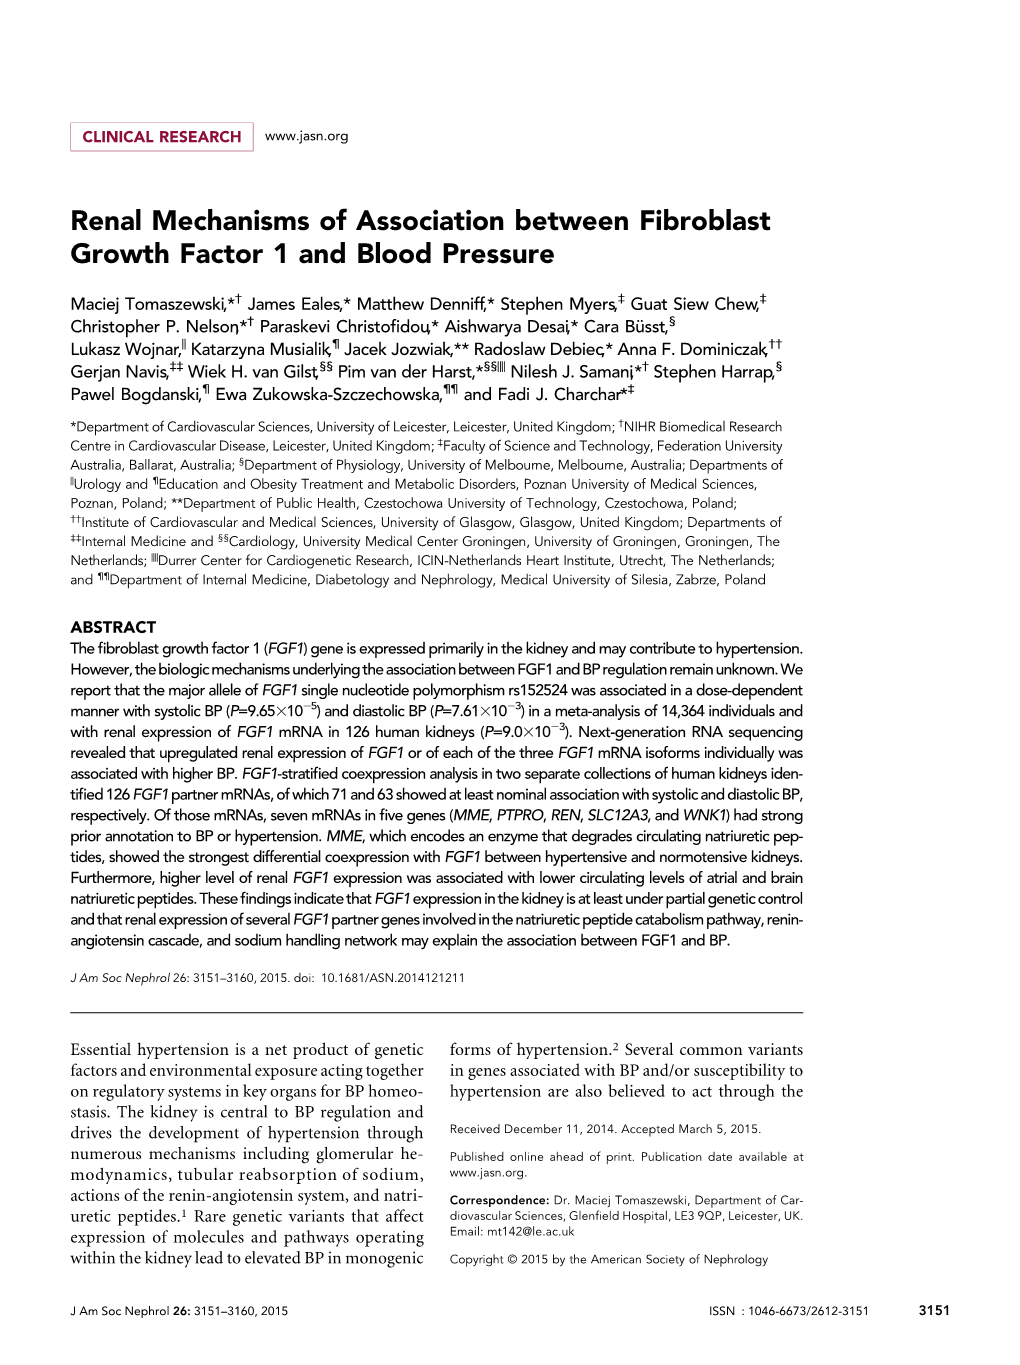 Renal Mechanisms of Association Between Fibroblast Growth Factor 1 and Blood Pressure